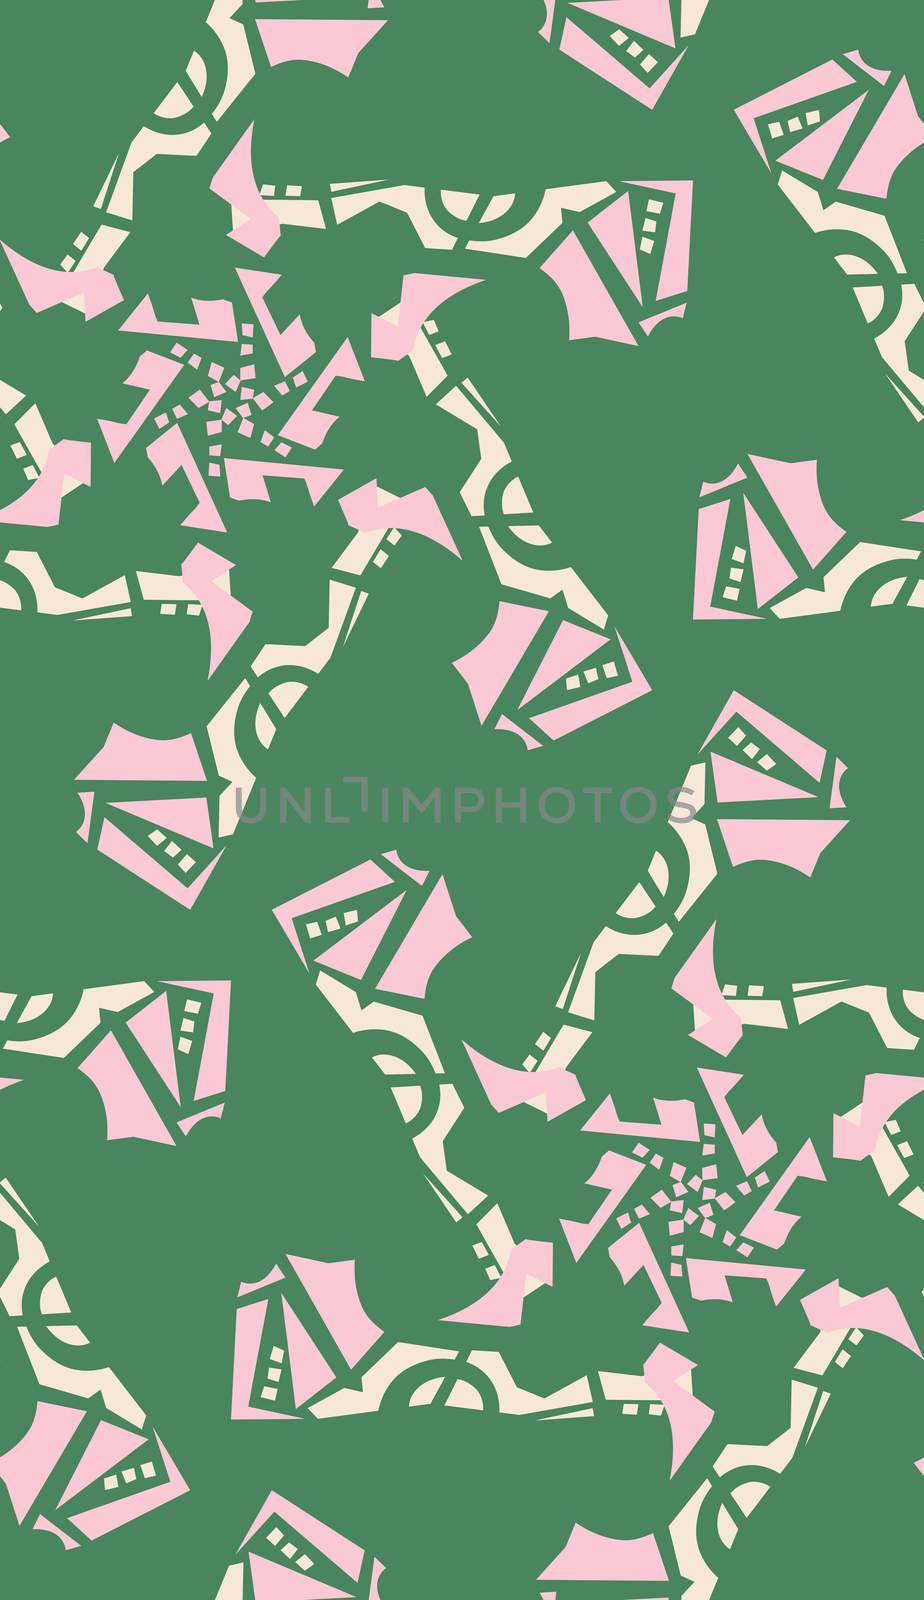 Green kaleidoscope background pattern of pink star shapes